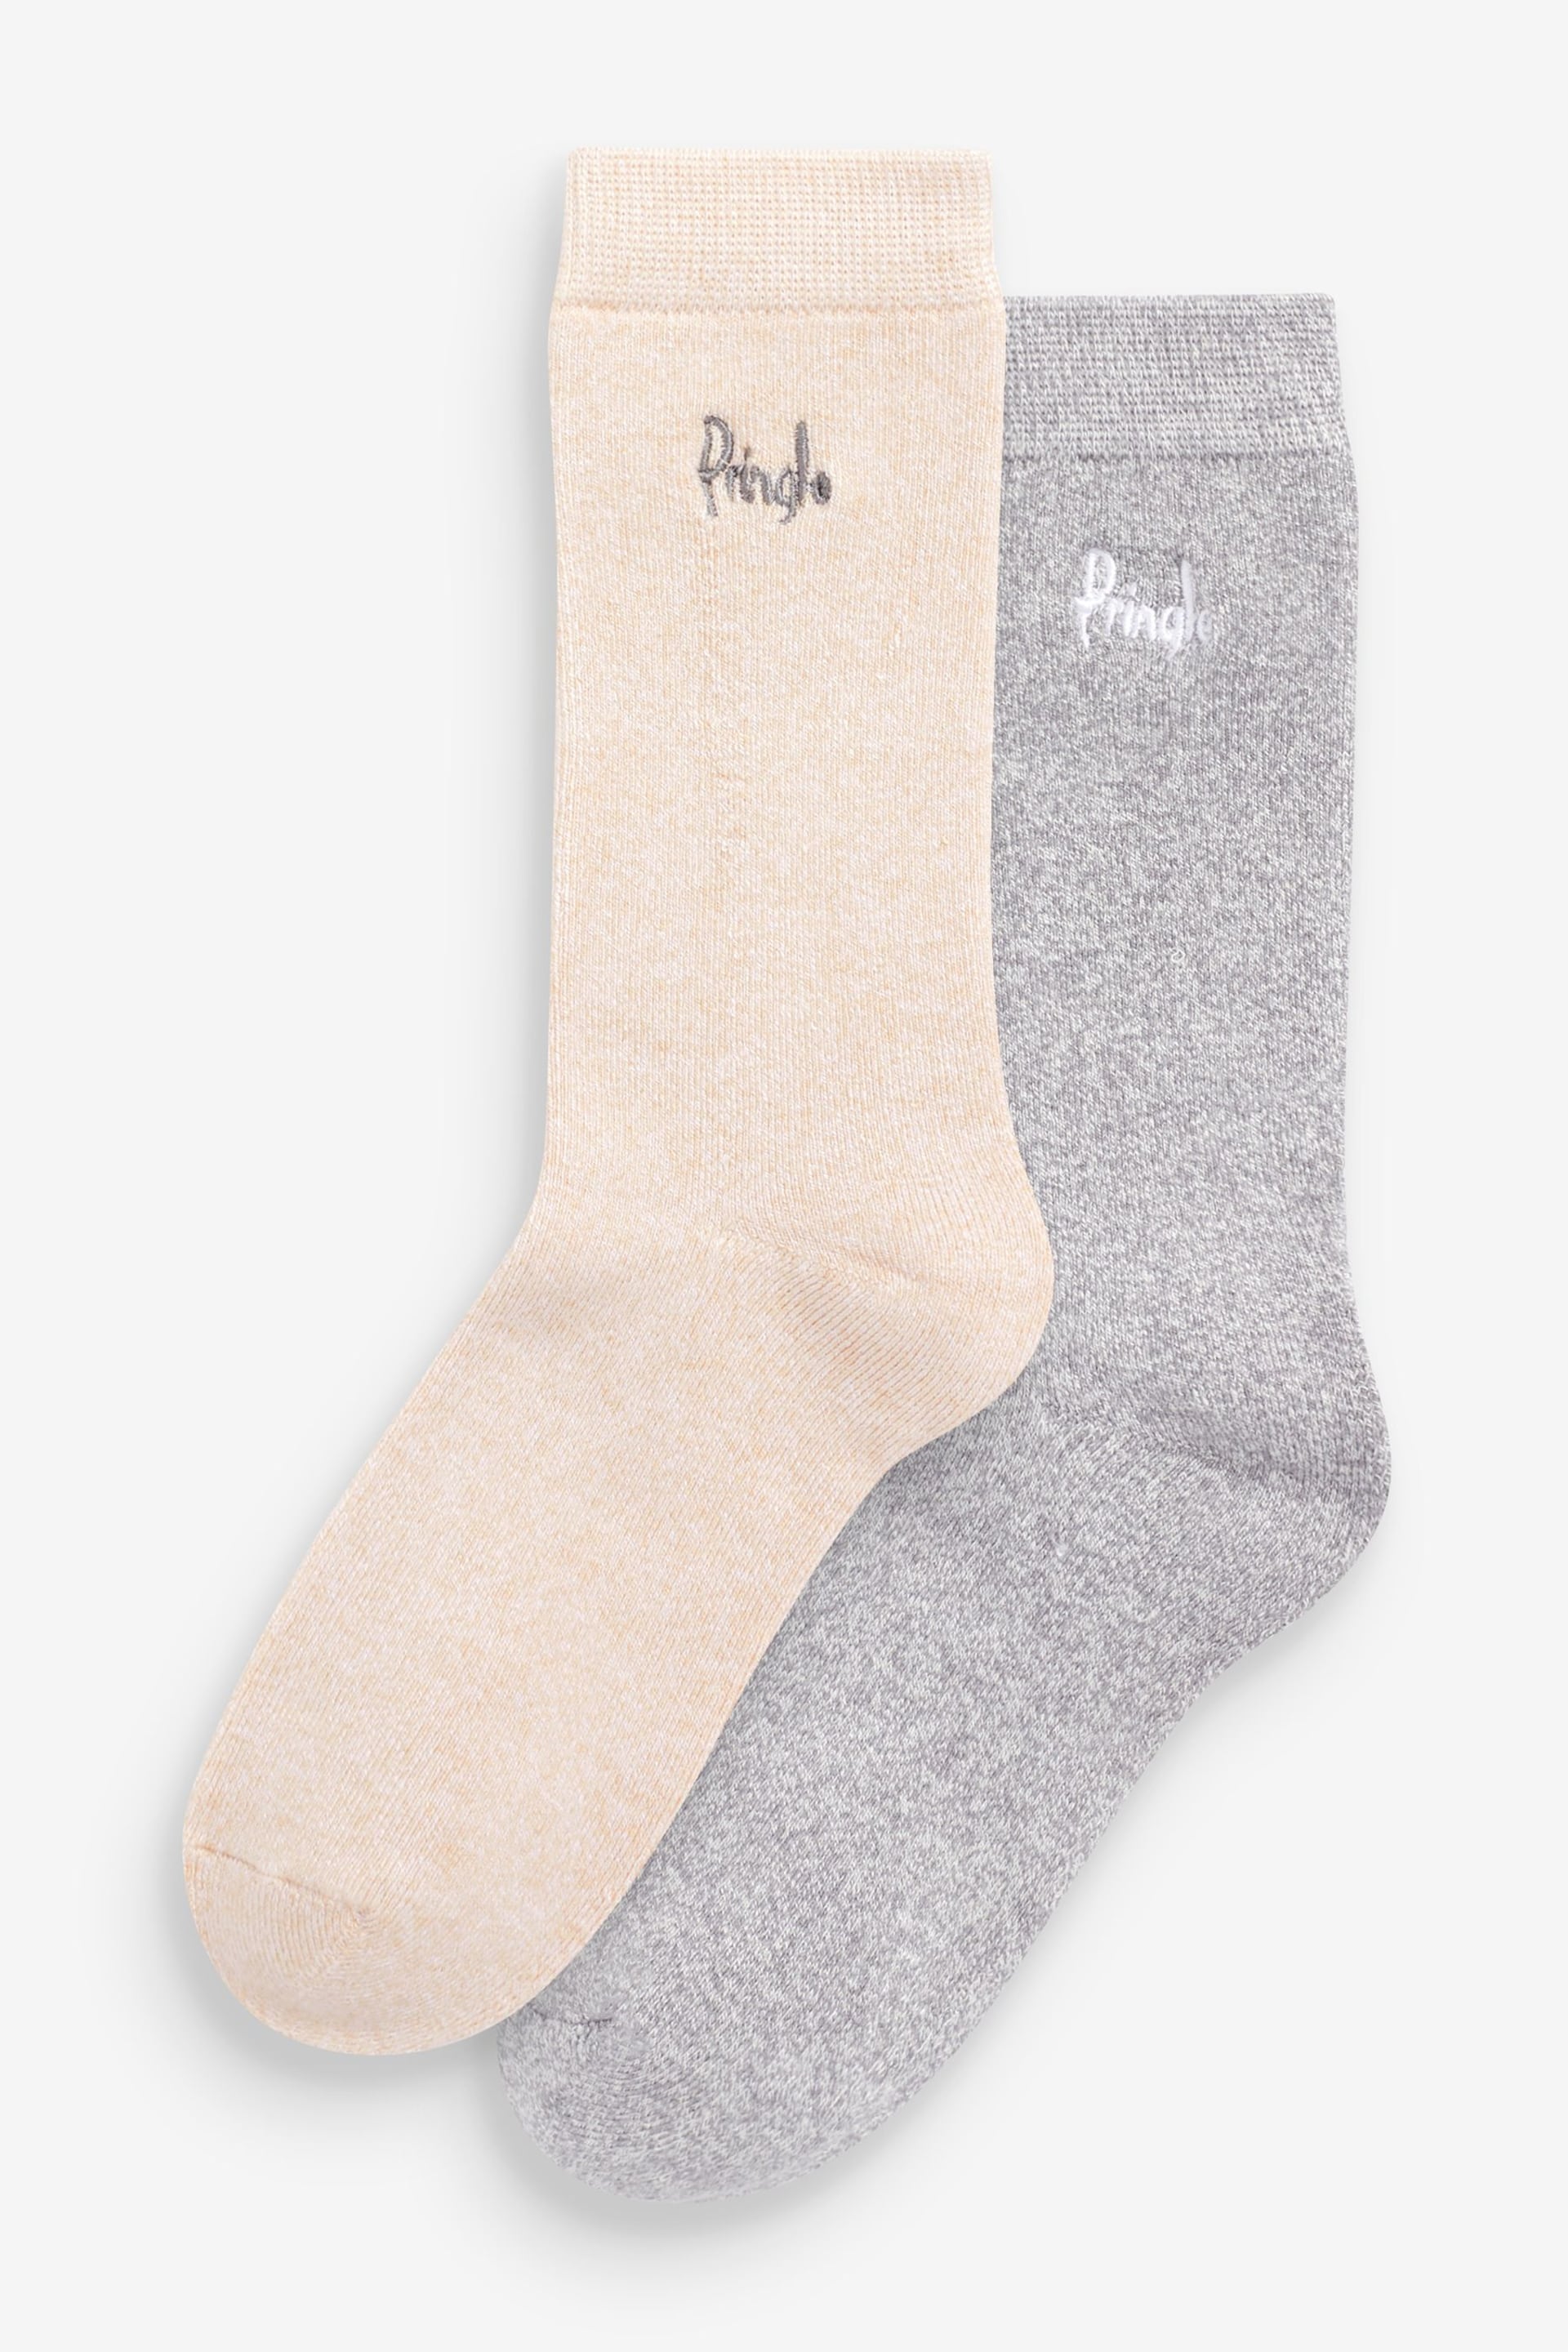 Pringle Grey Twist Yarn Full Cushioned leisure Socks - Image 1 of 3